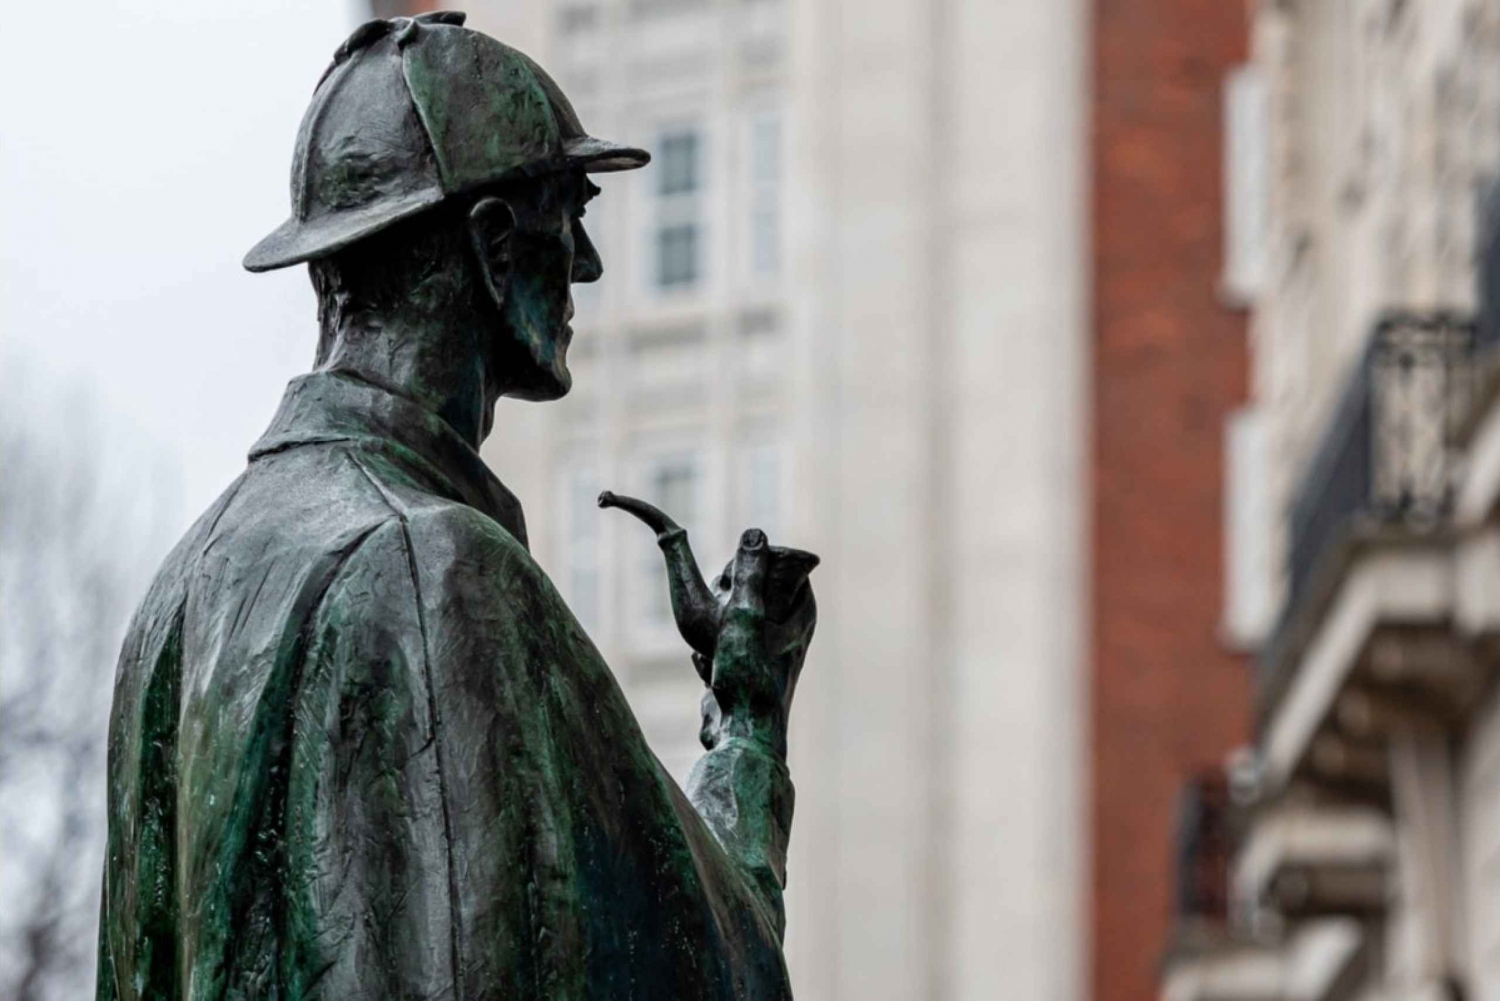 London: Sherlock Holmes knäcka fallet utomhus Escape Game